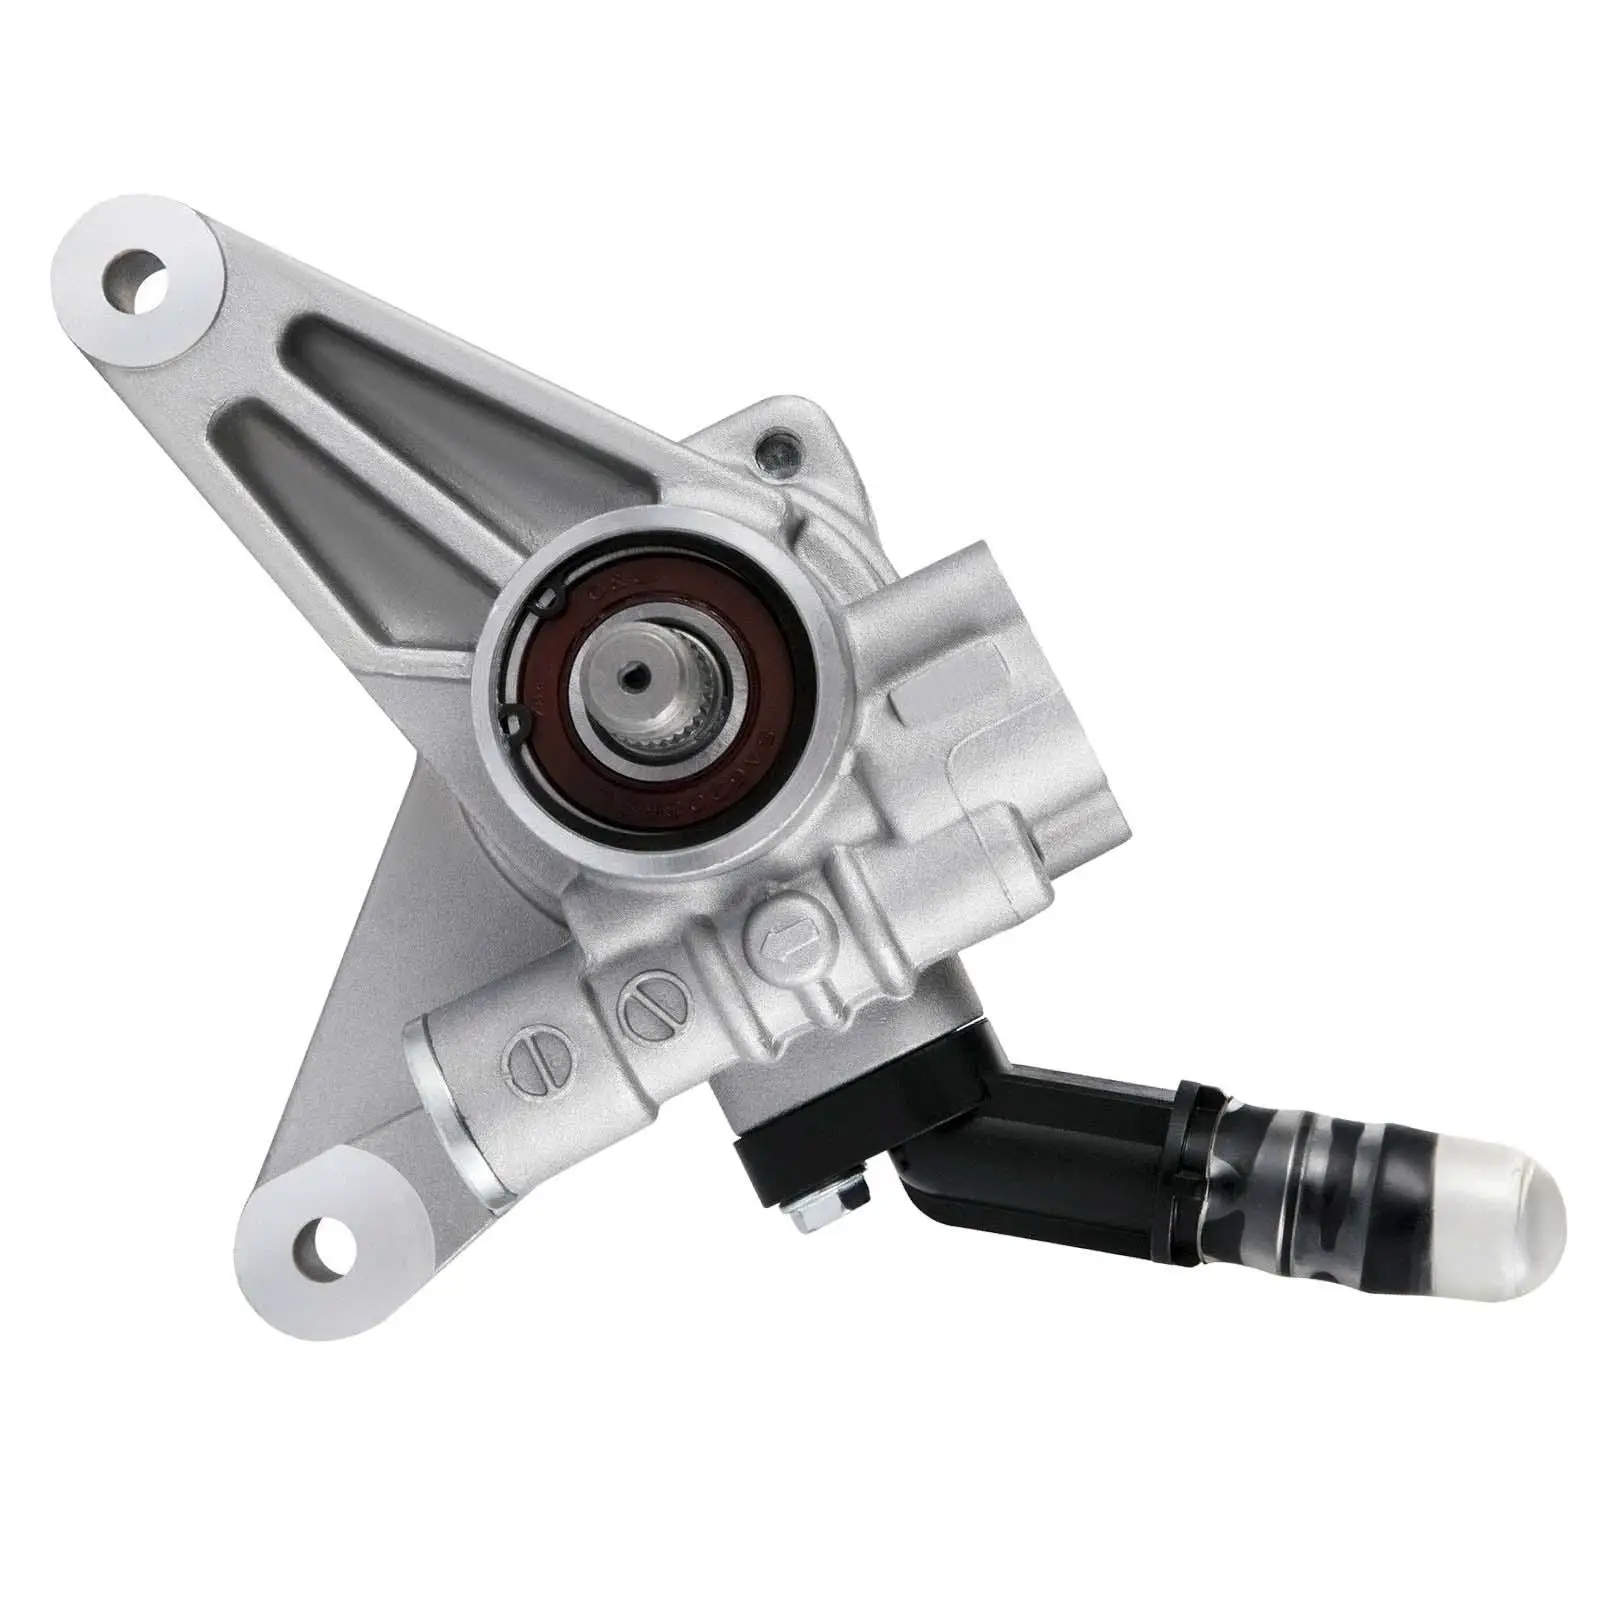 Power Steering Pump Rgl-a03zlzxb00001 Replacement Car Accessories for Honda Pilot Odyssey Premium Repair Part